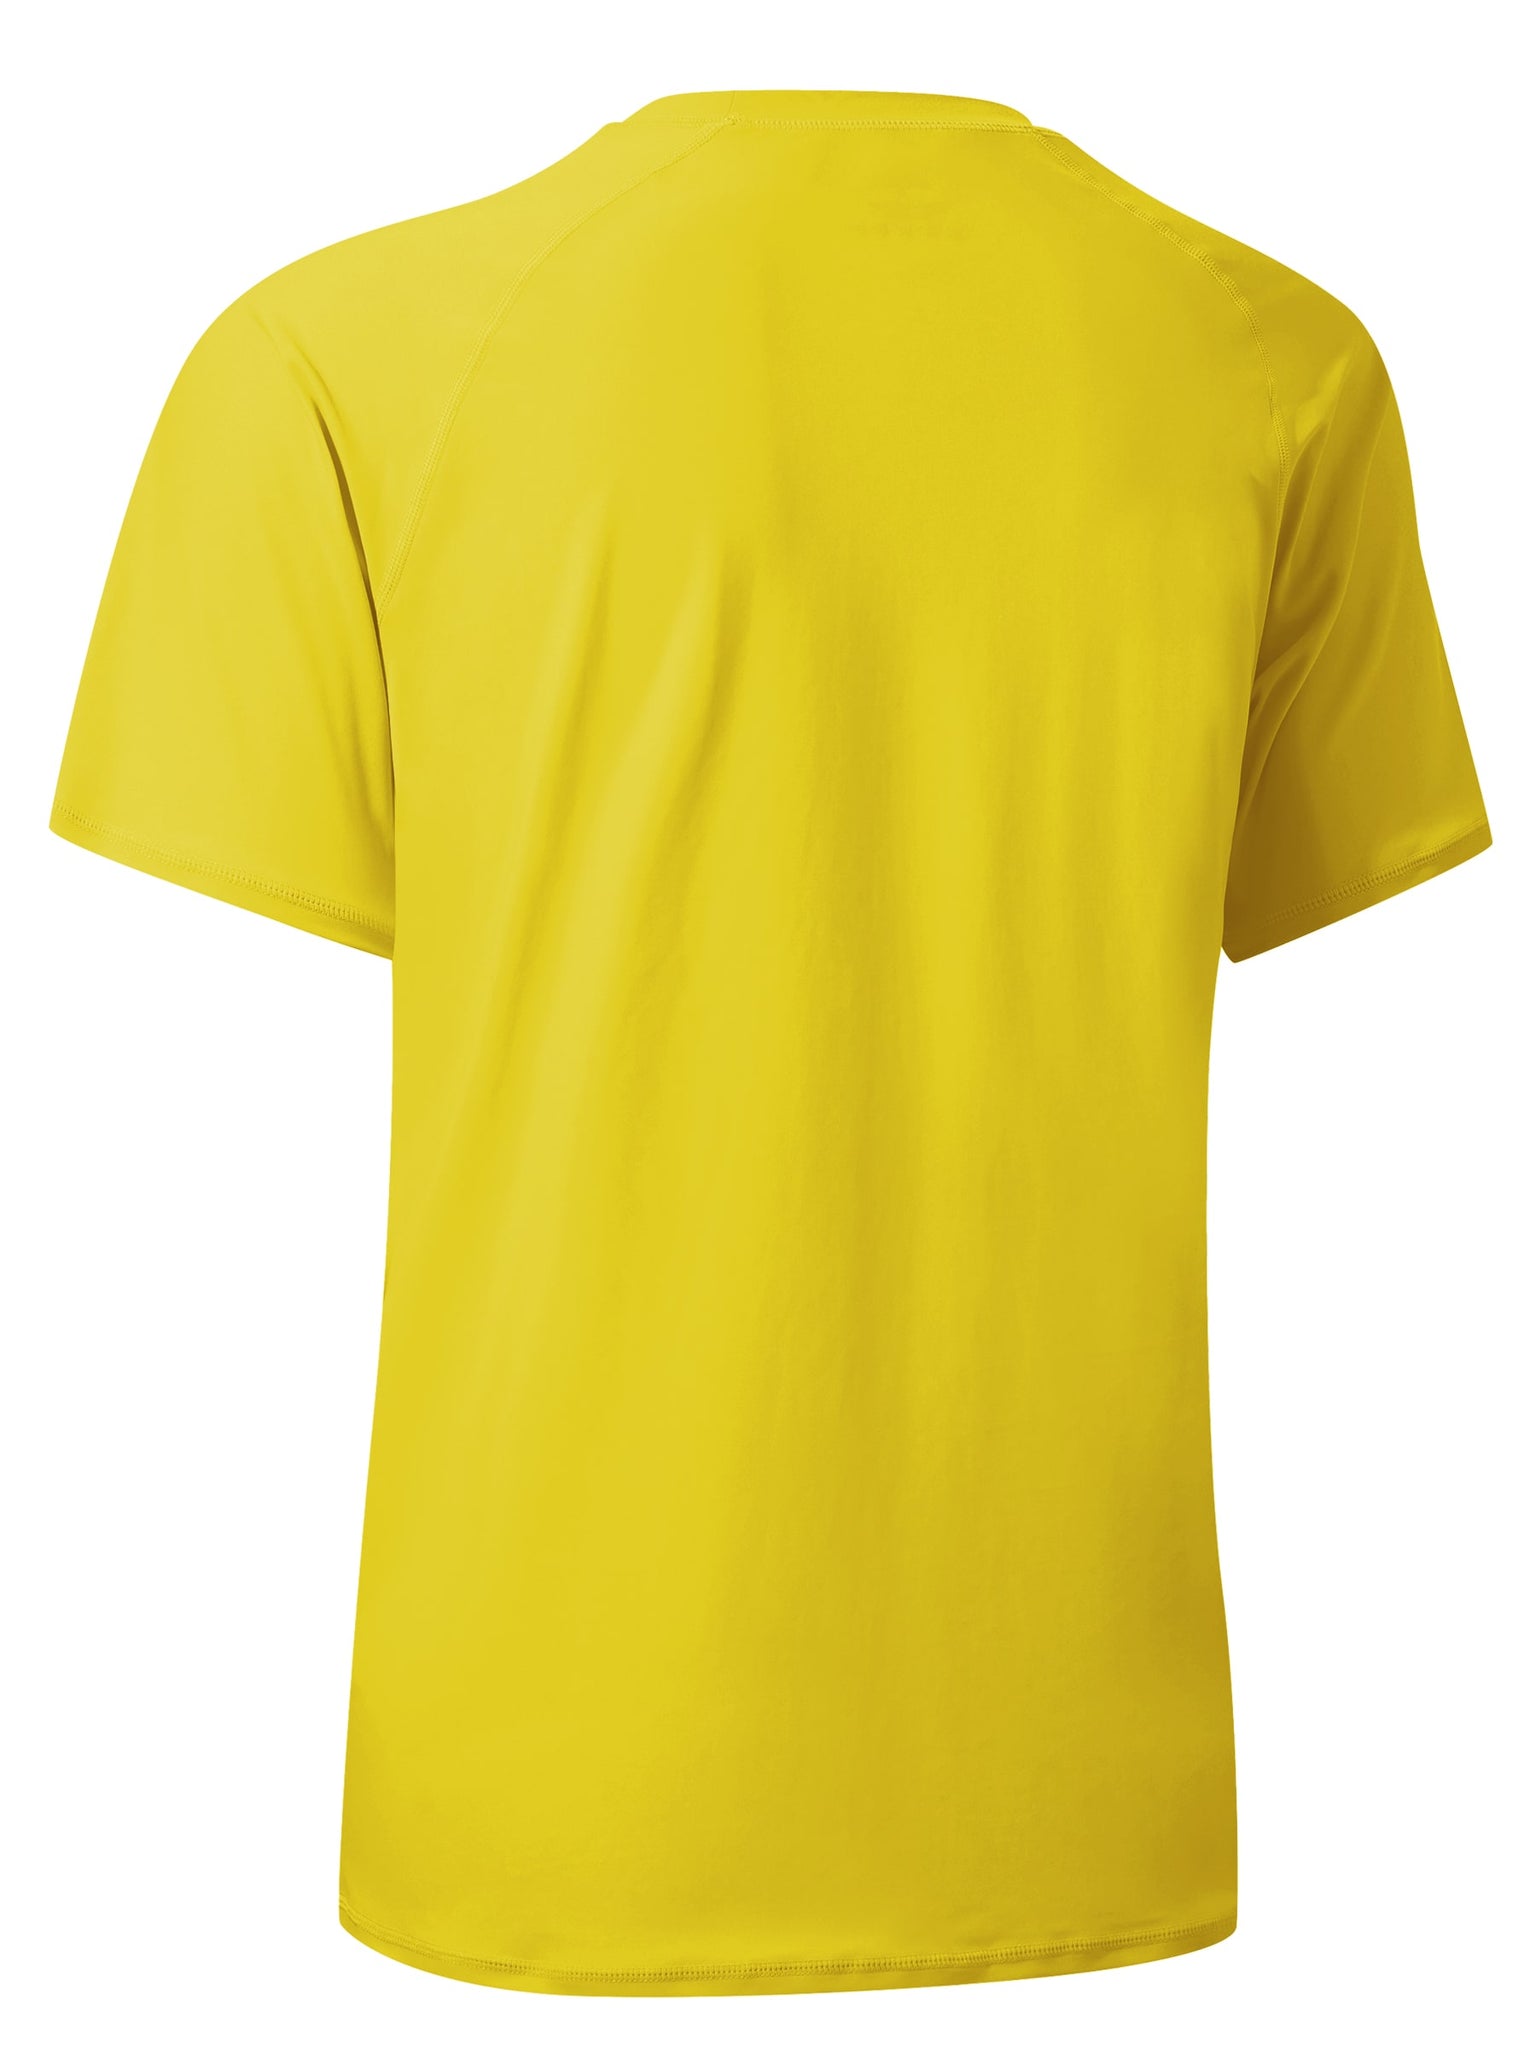 Men's Sun Protection Short Sleeve Shirt_Yellow_detail2